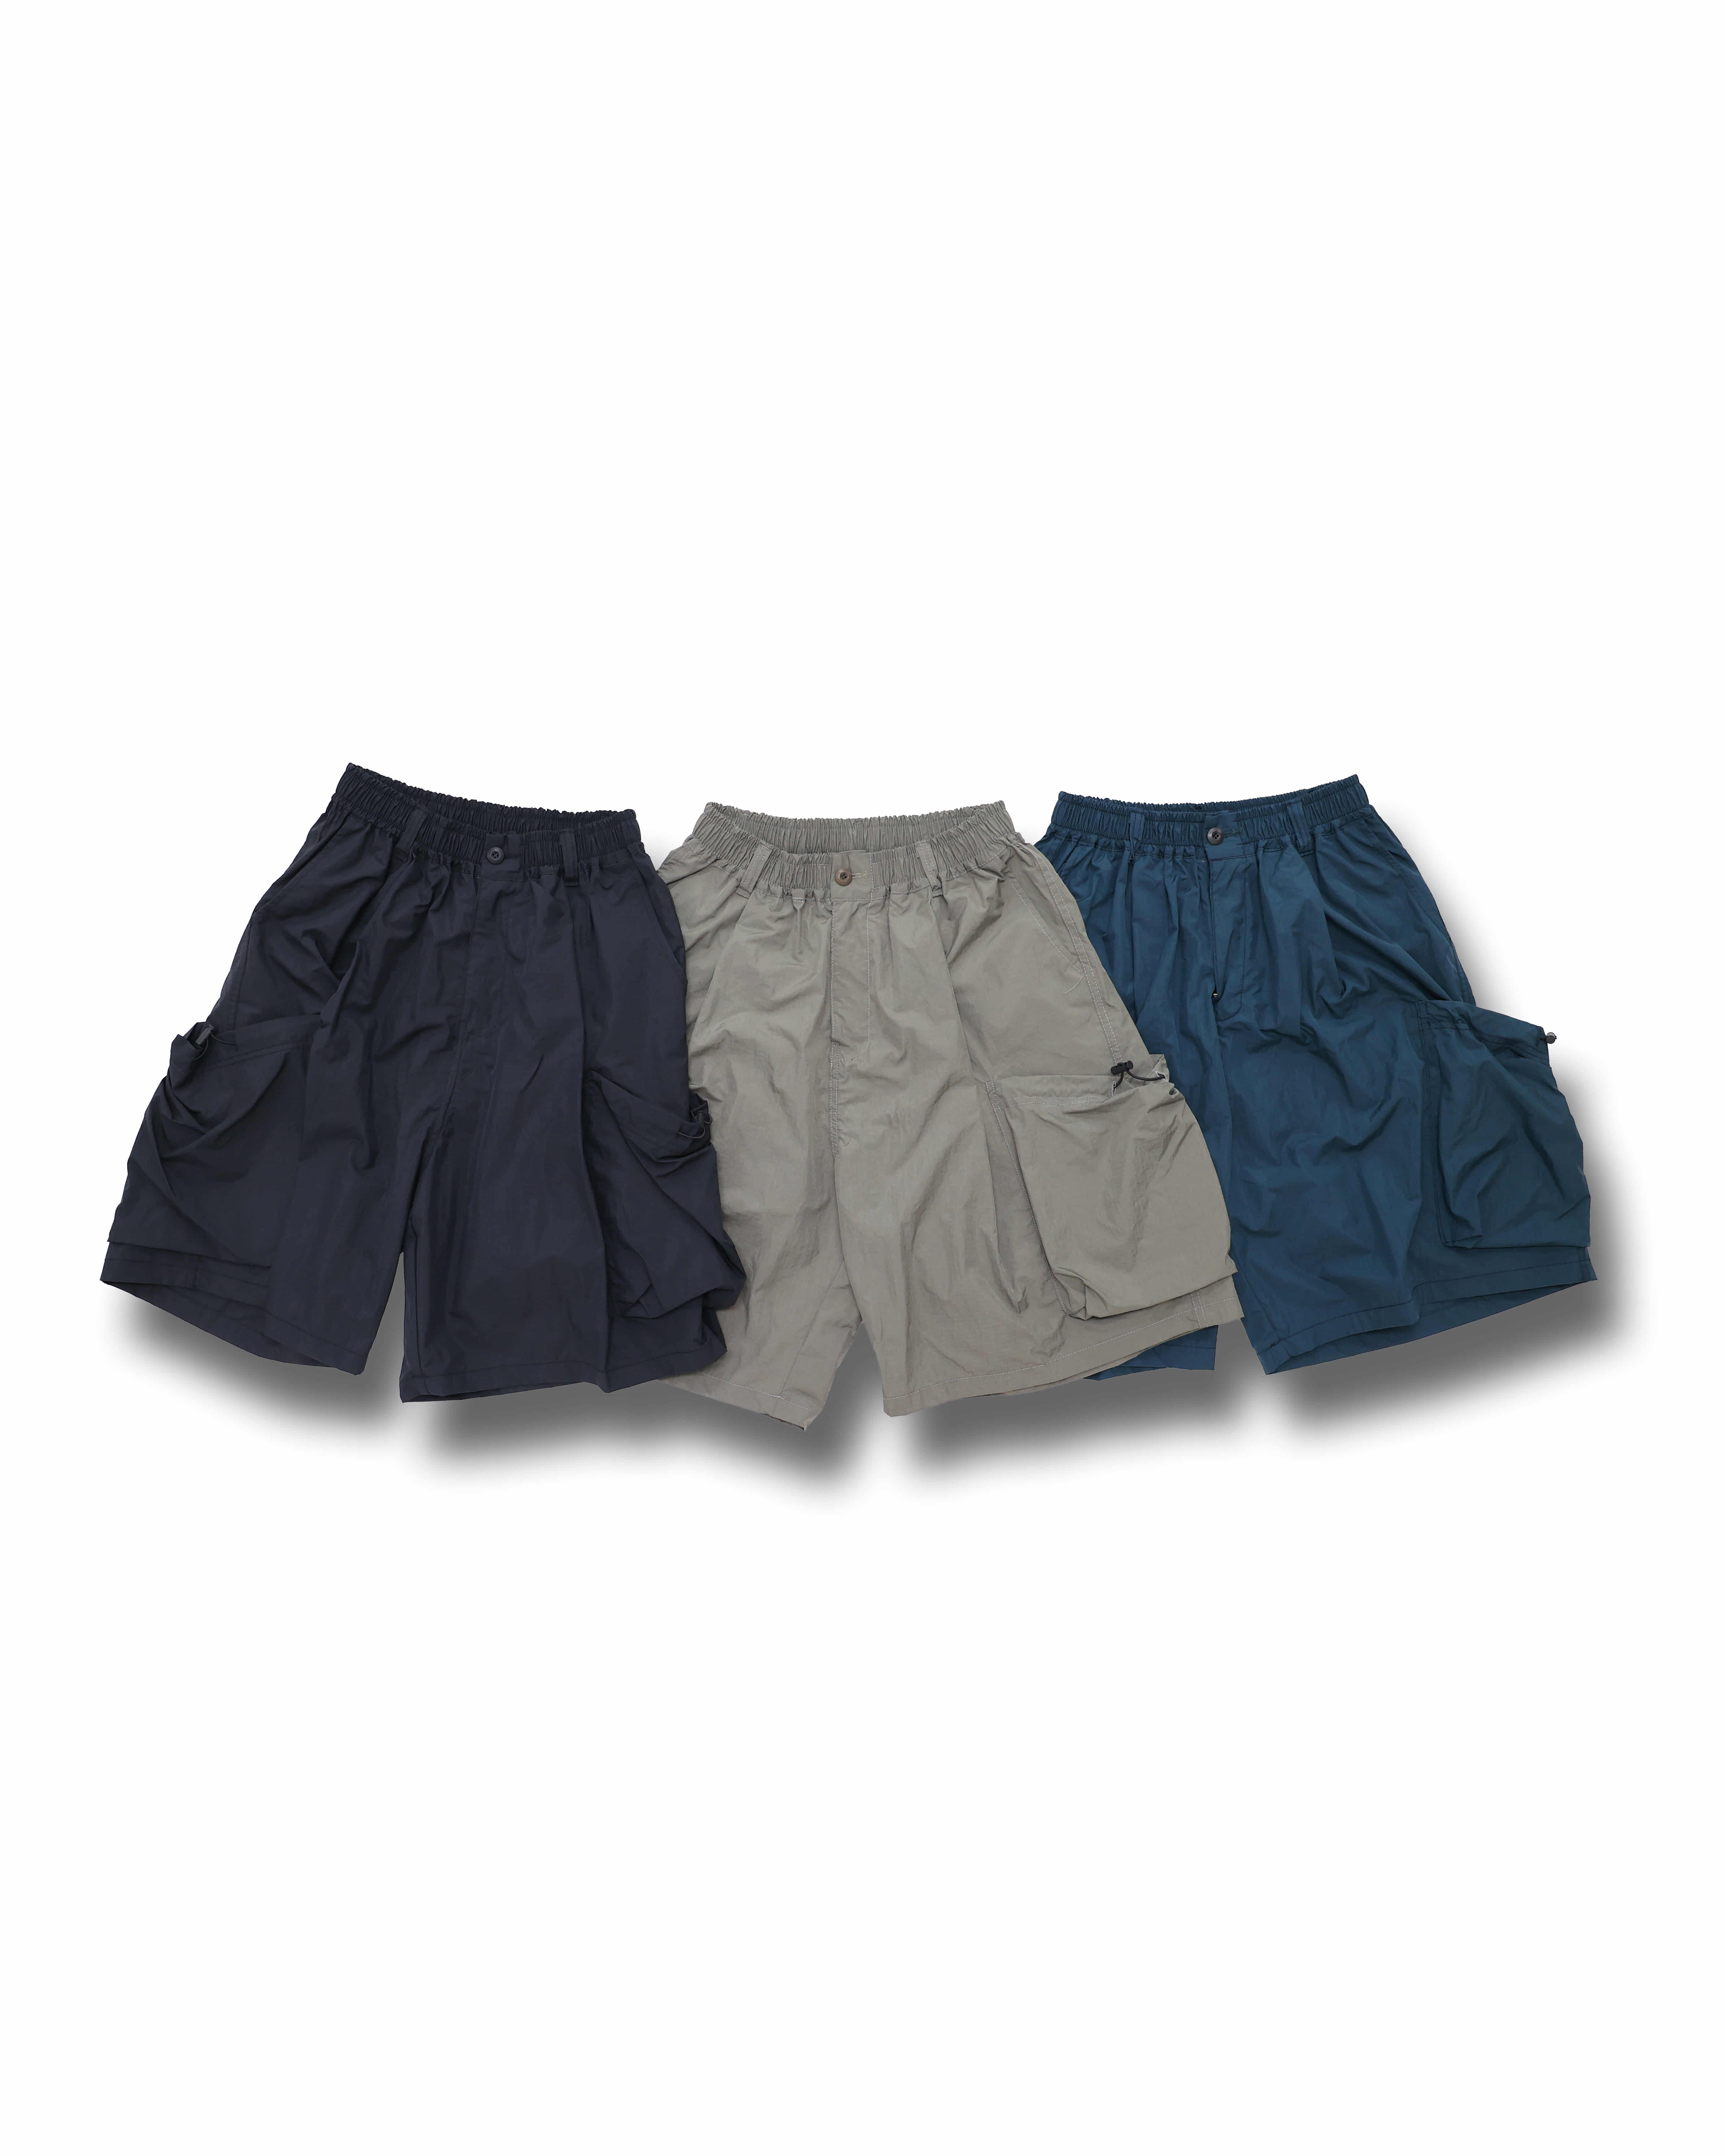 Big Side String Nylon Shorts (Black/Blue Green/Khaki)